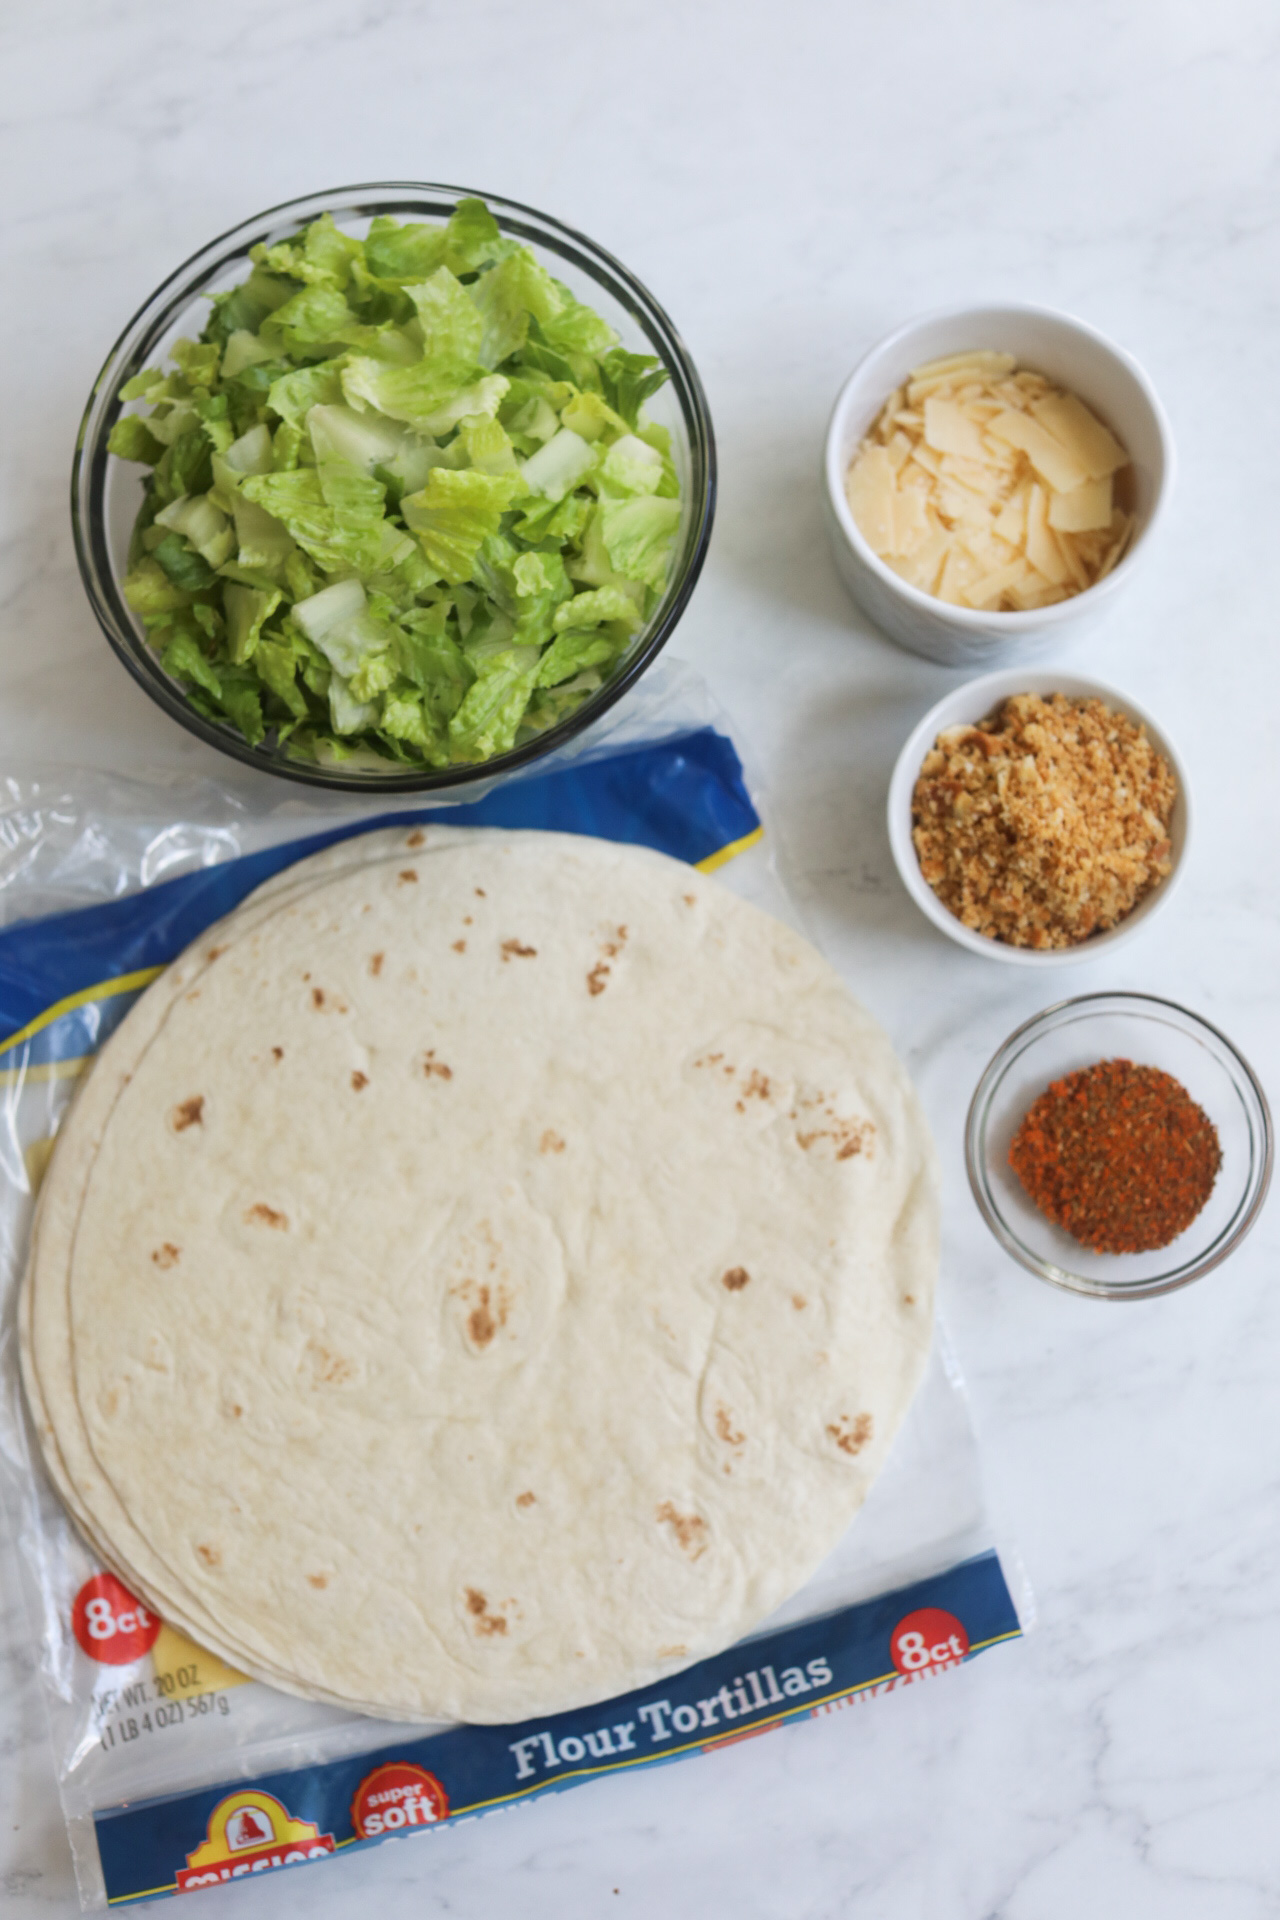 Caesar wrap ingredients. In a flat lay, large tortillas, bowl of romaine lettuce, parmesan cheese, breadcrumbs and cajun seasoning are displayed.